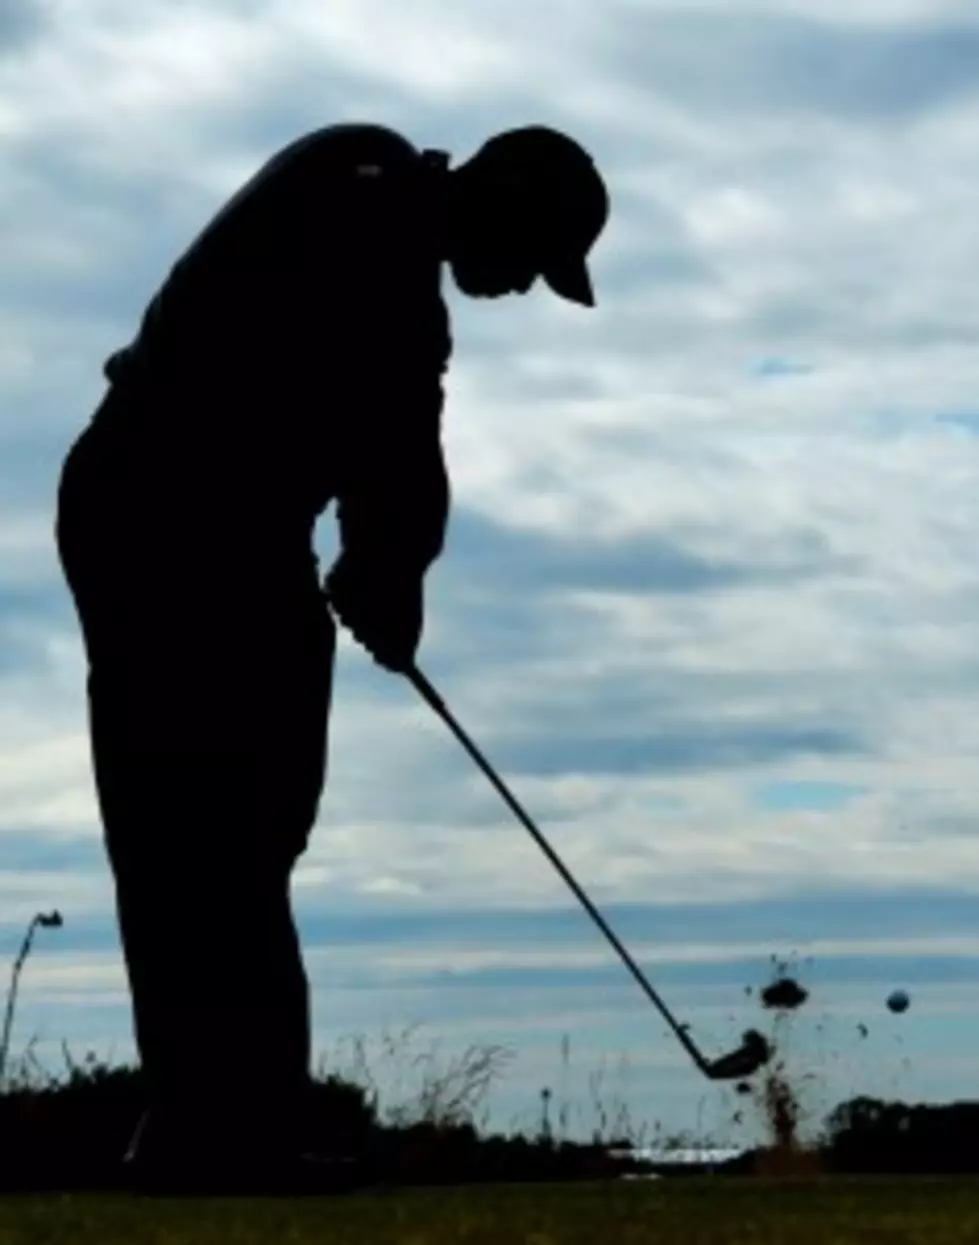 Casper Municipal Golf Course Fee Changes for 2015